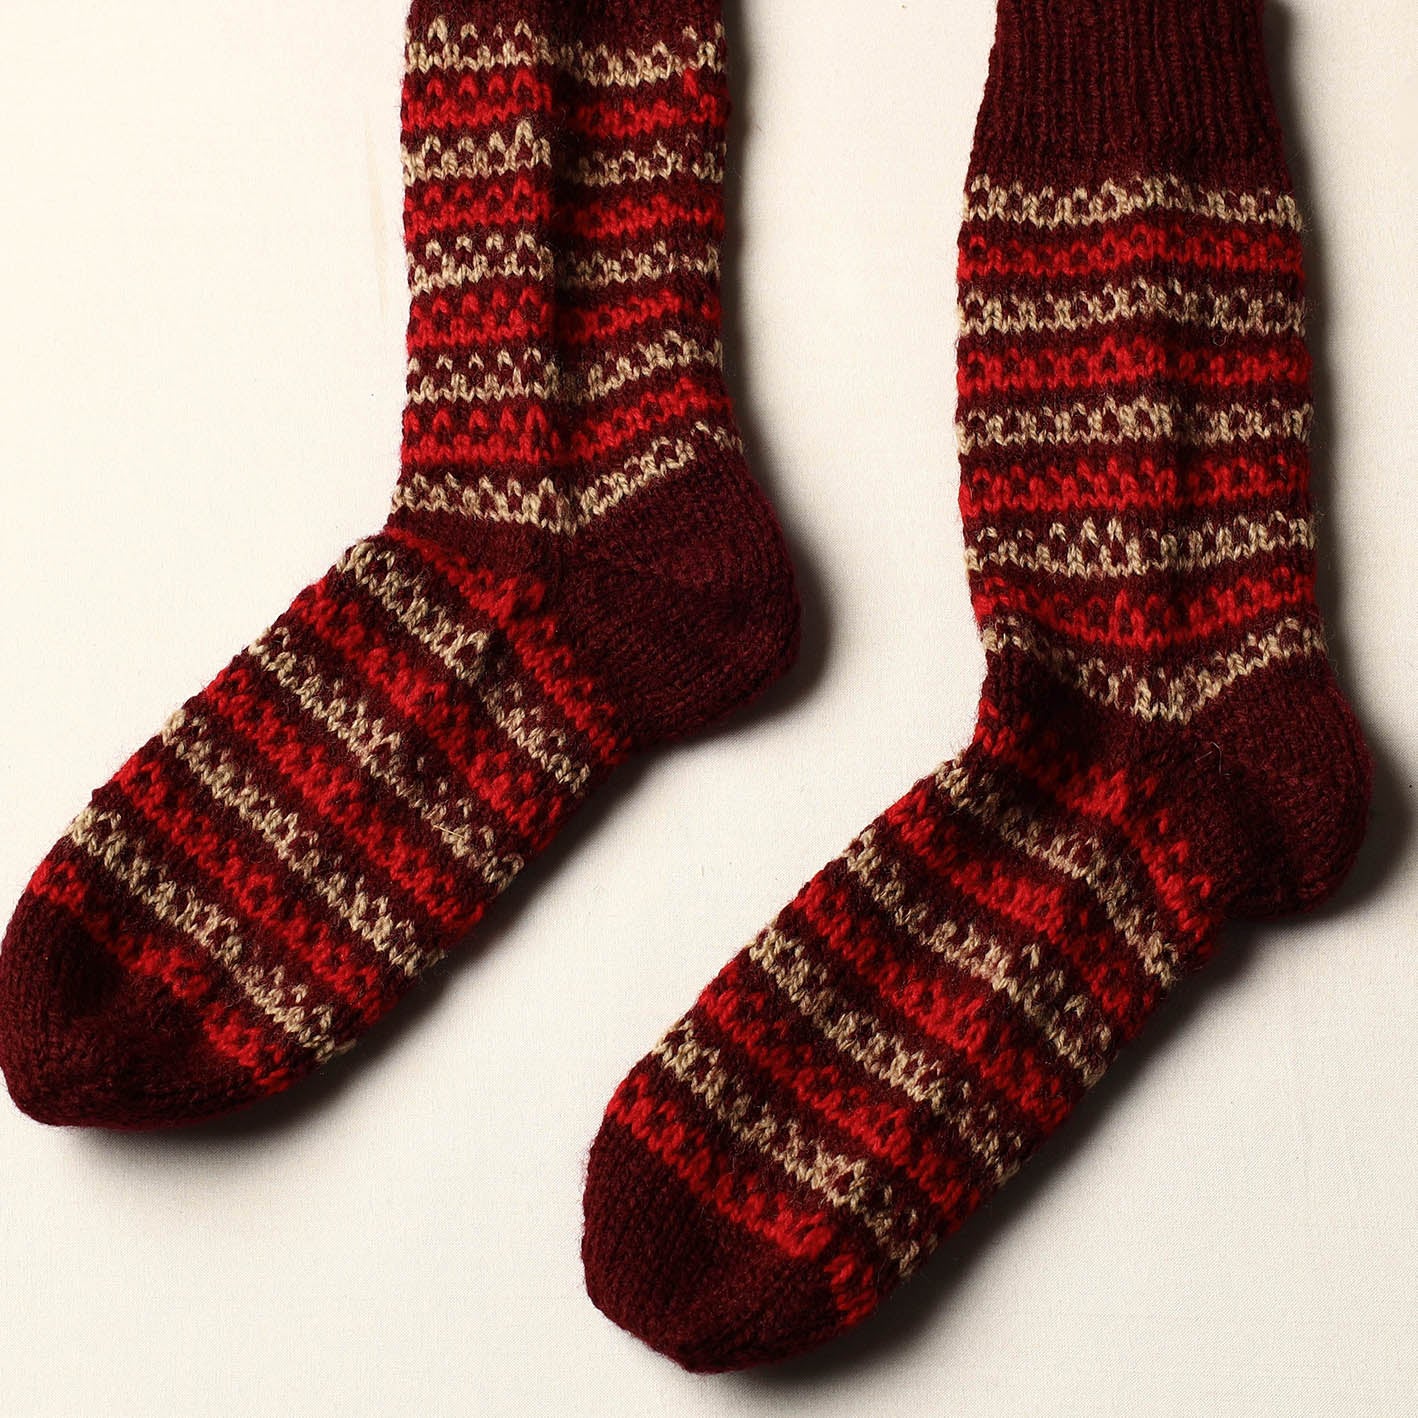 Multicolor - Kumaun Hand Knitted Woolen Socks (Adult)